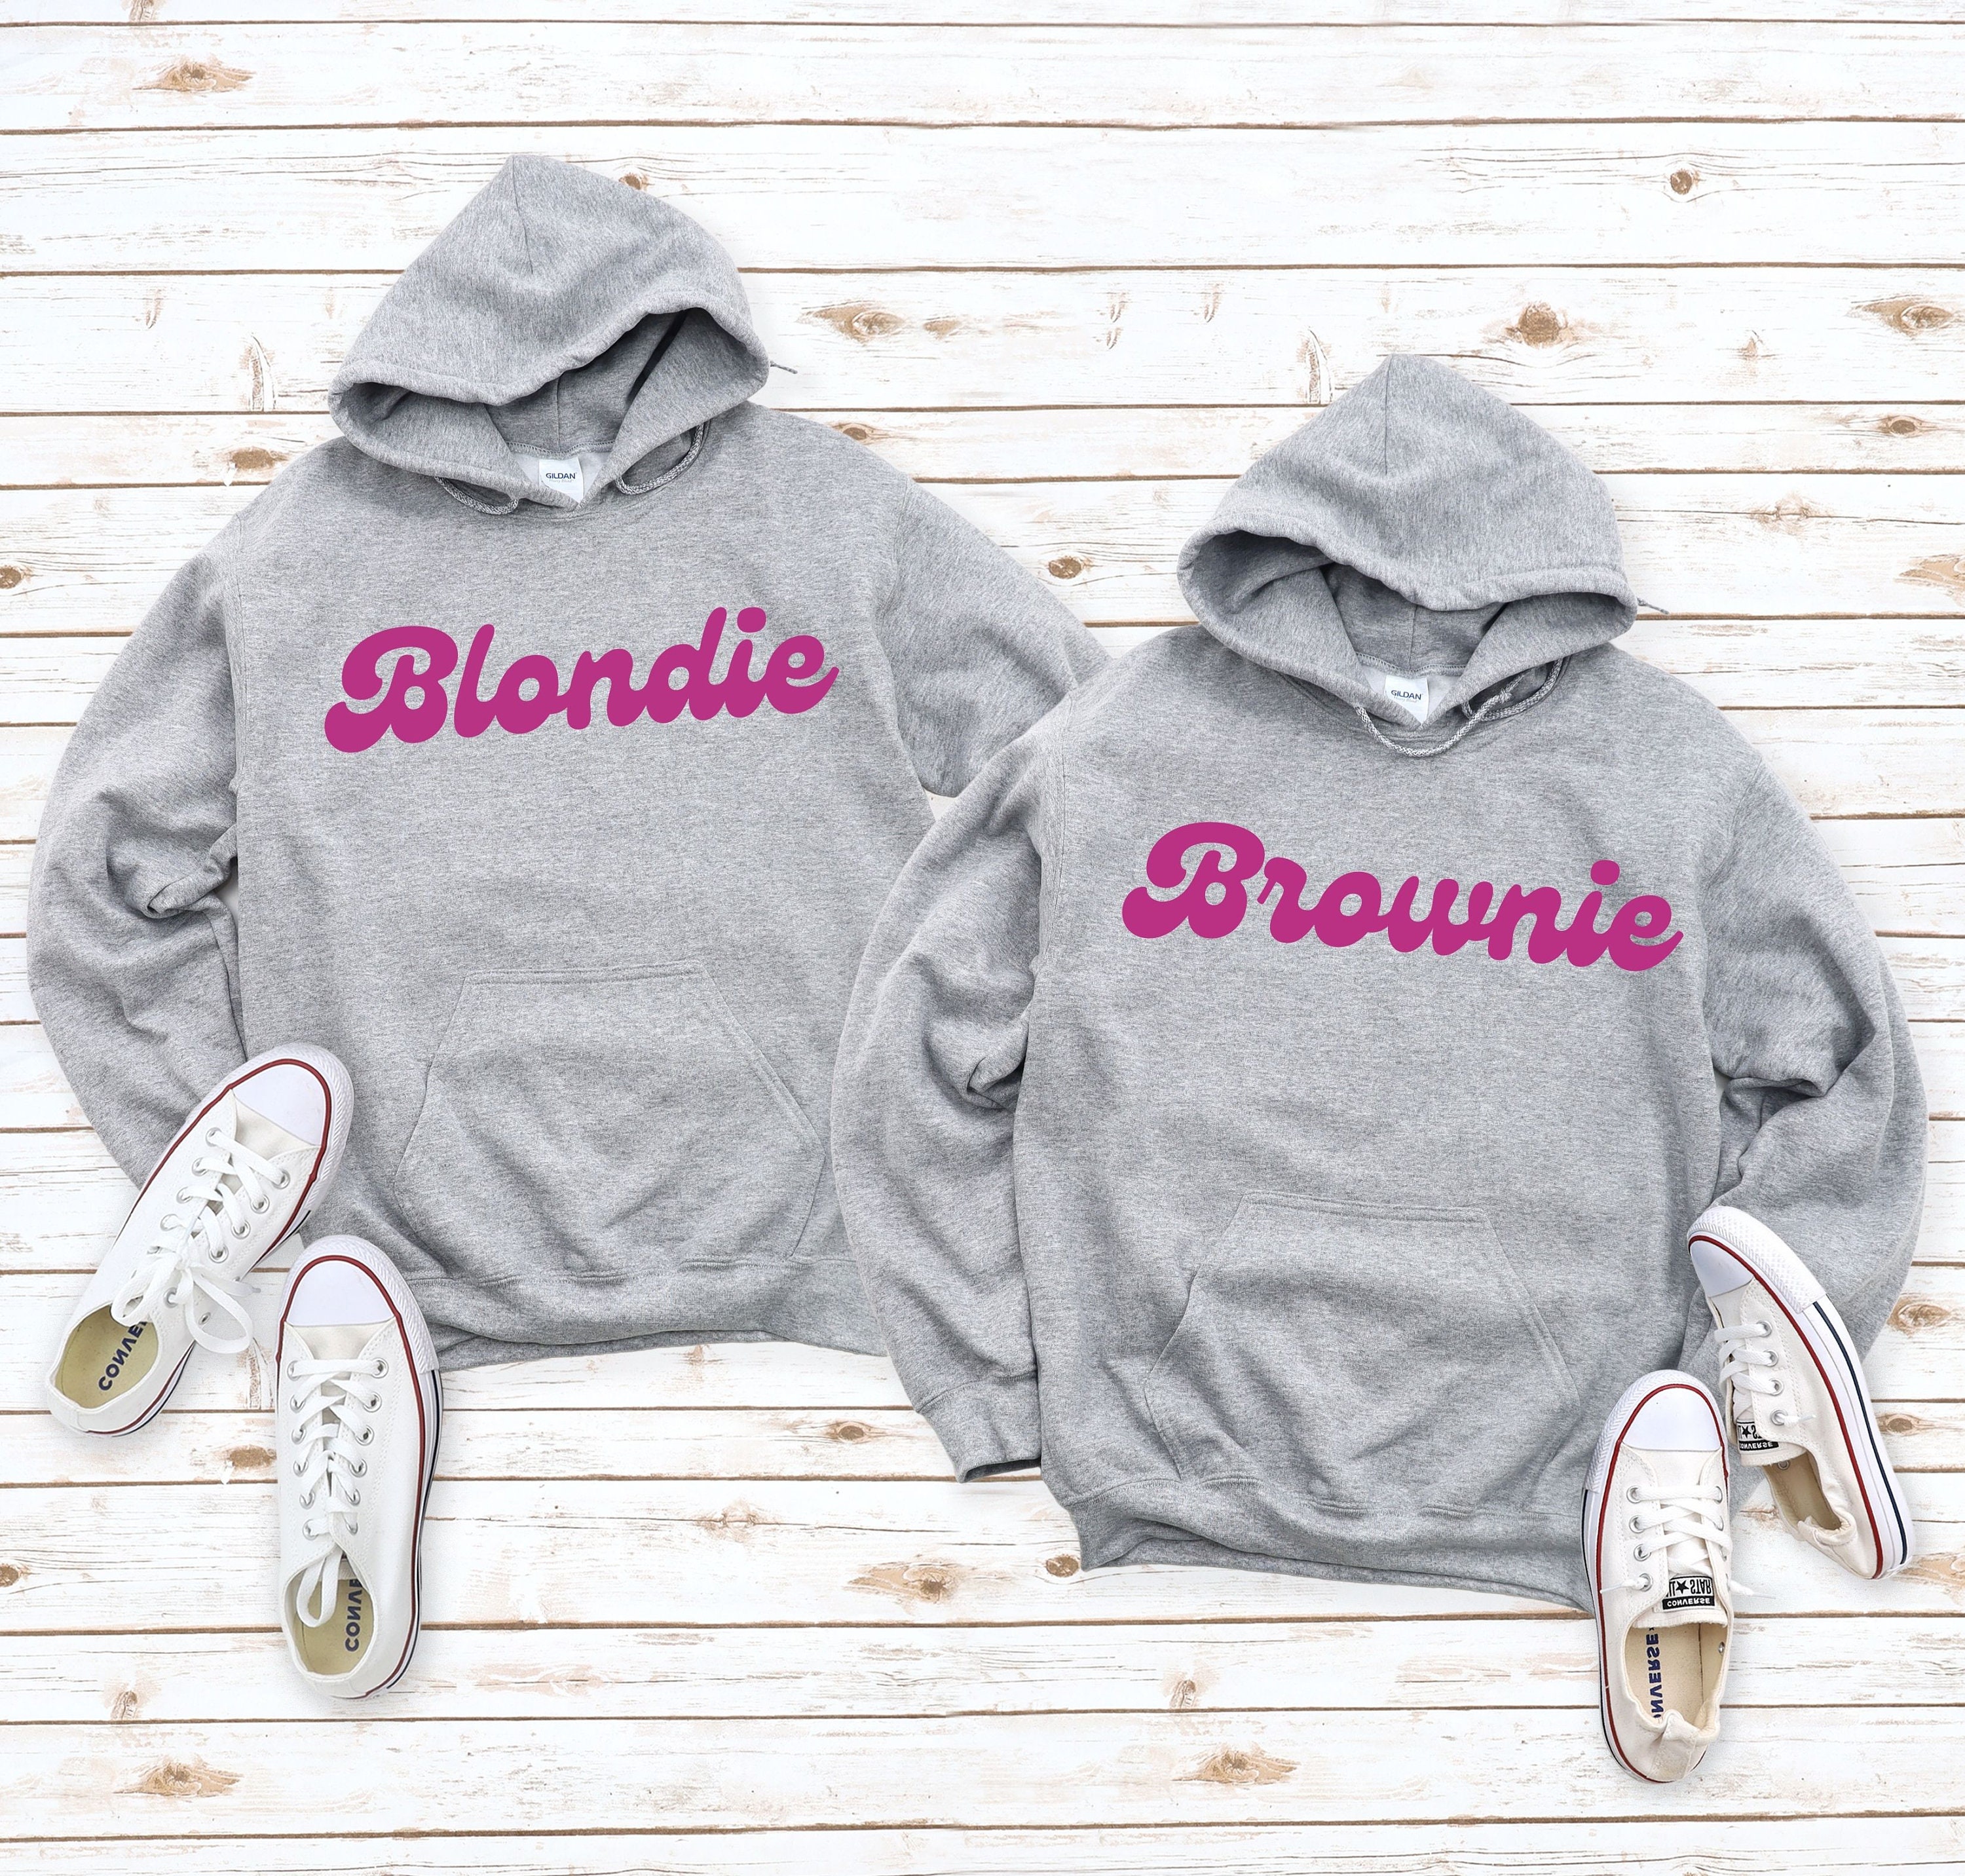 Gedragen Sandy kader Blondie & brownie best friend hoodies best friend gift - Etsy België